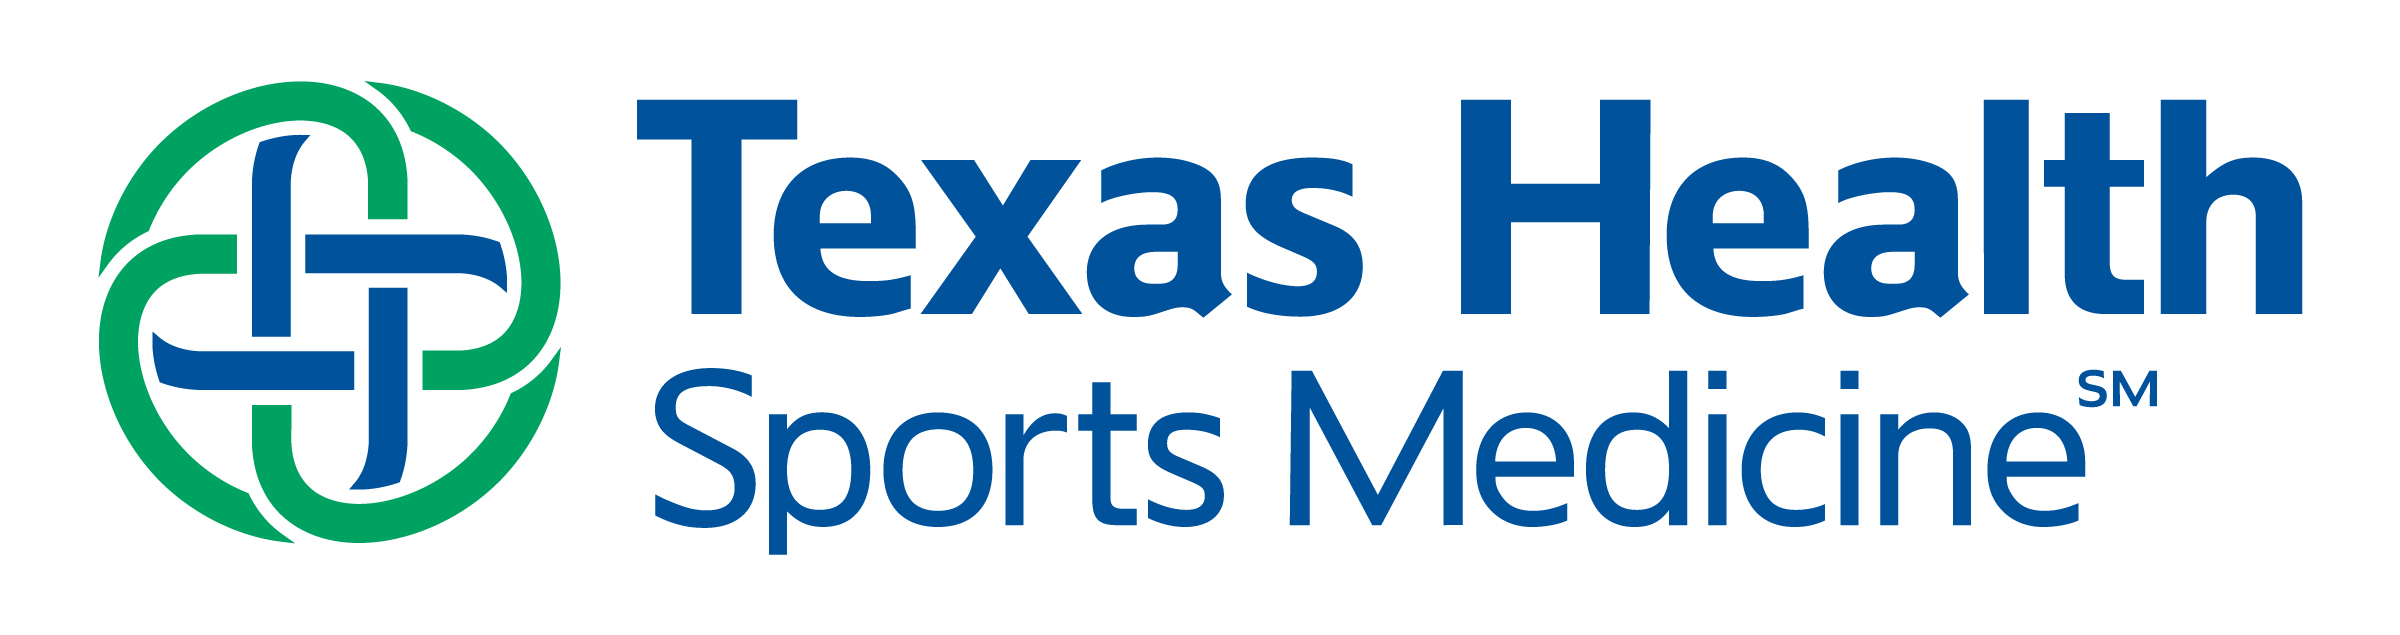 Texas Health Sports Medicine Standard